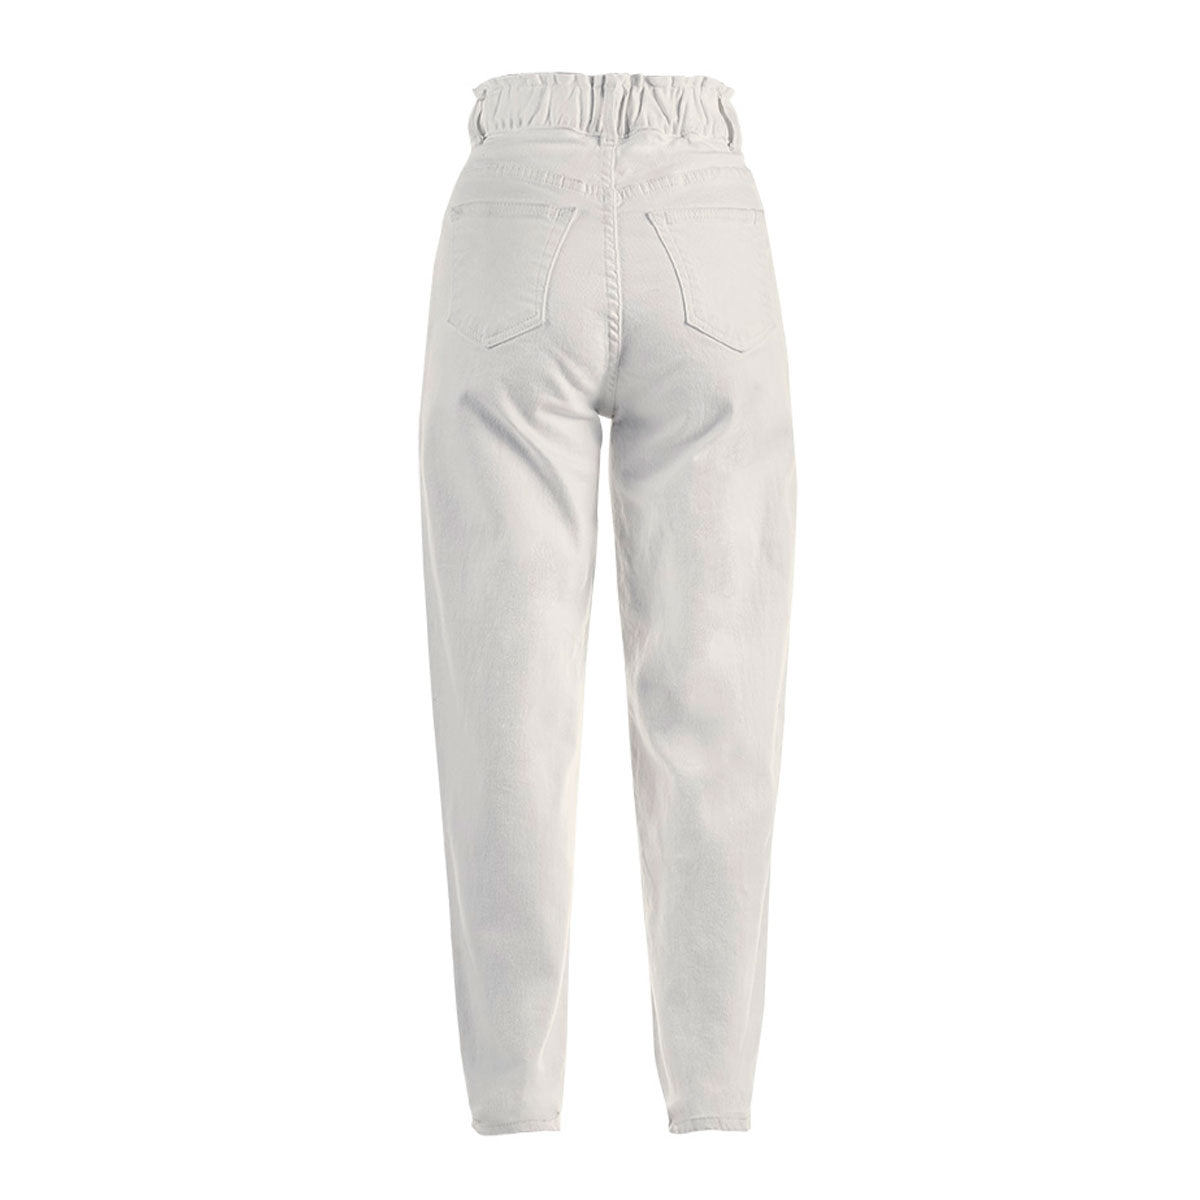 Jeans de Mezclilla Para Mujer TREVO 967-07 Blanco